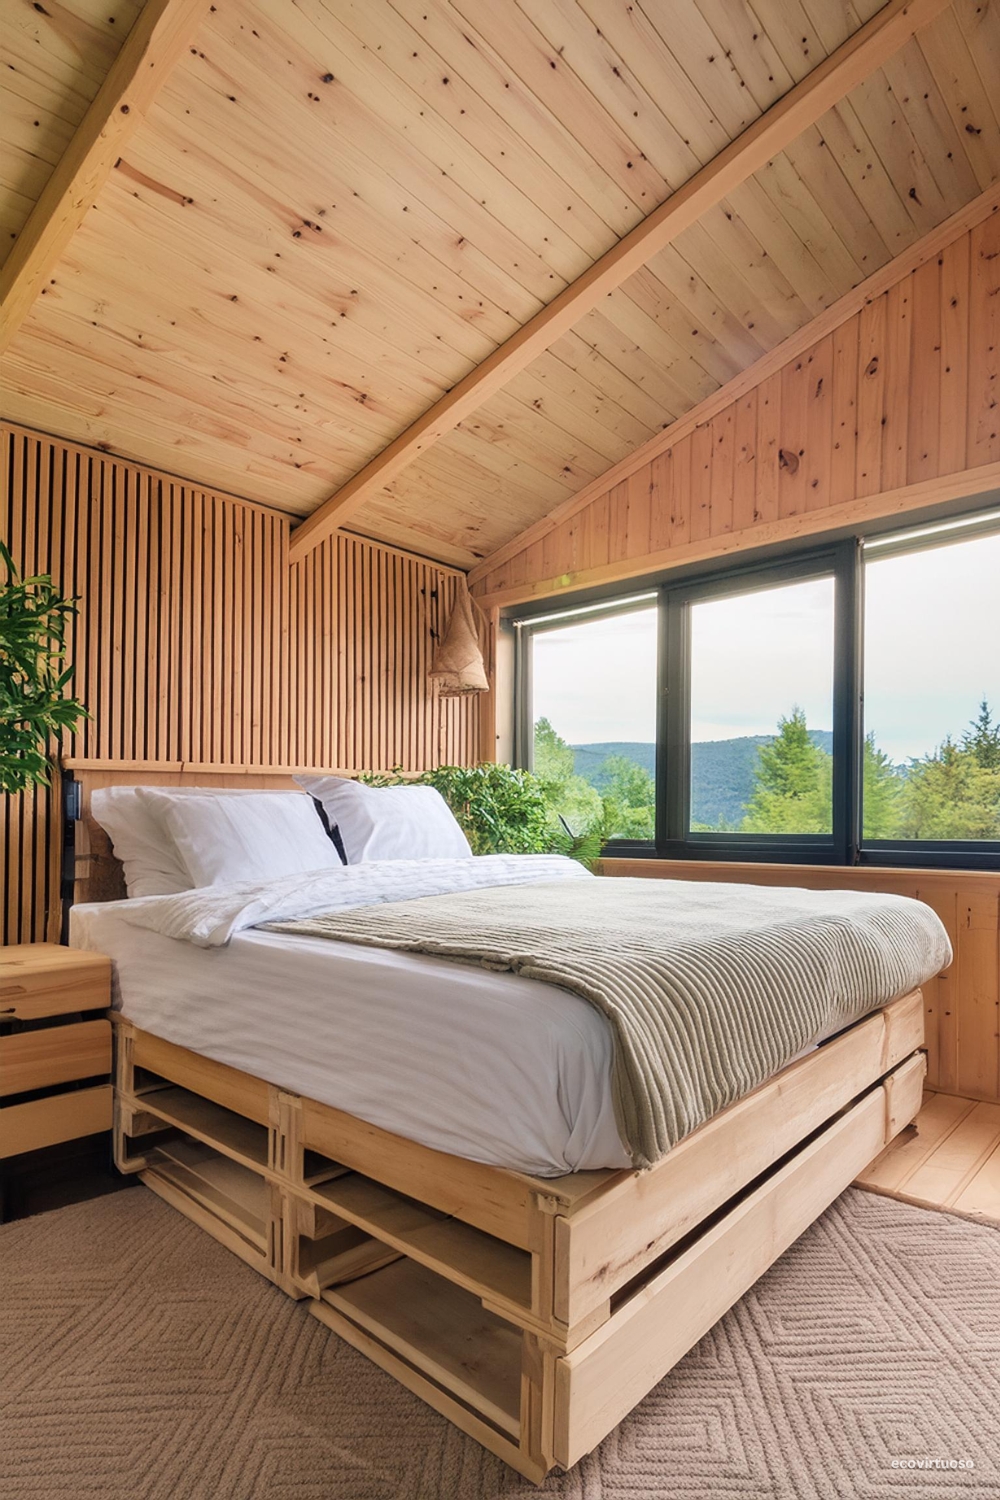 a bedroom inside an attic, wooden walls